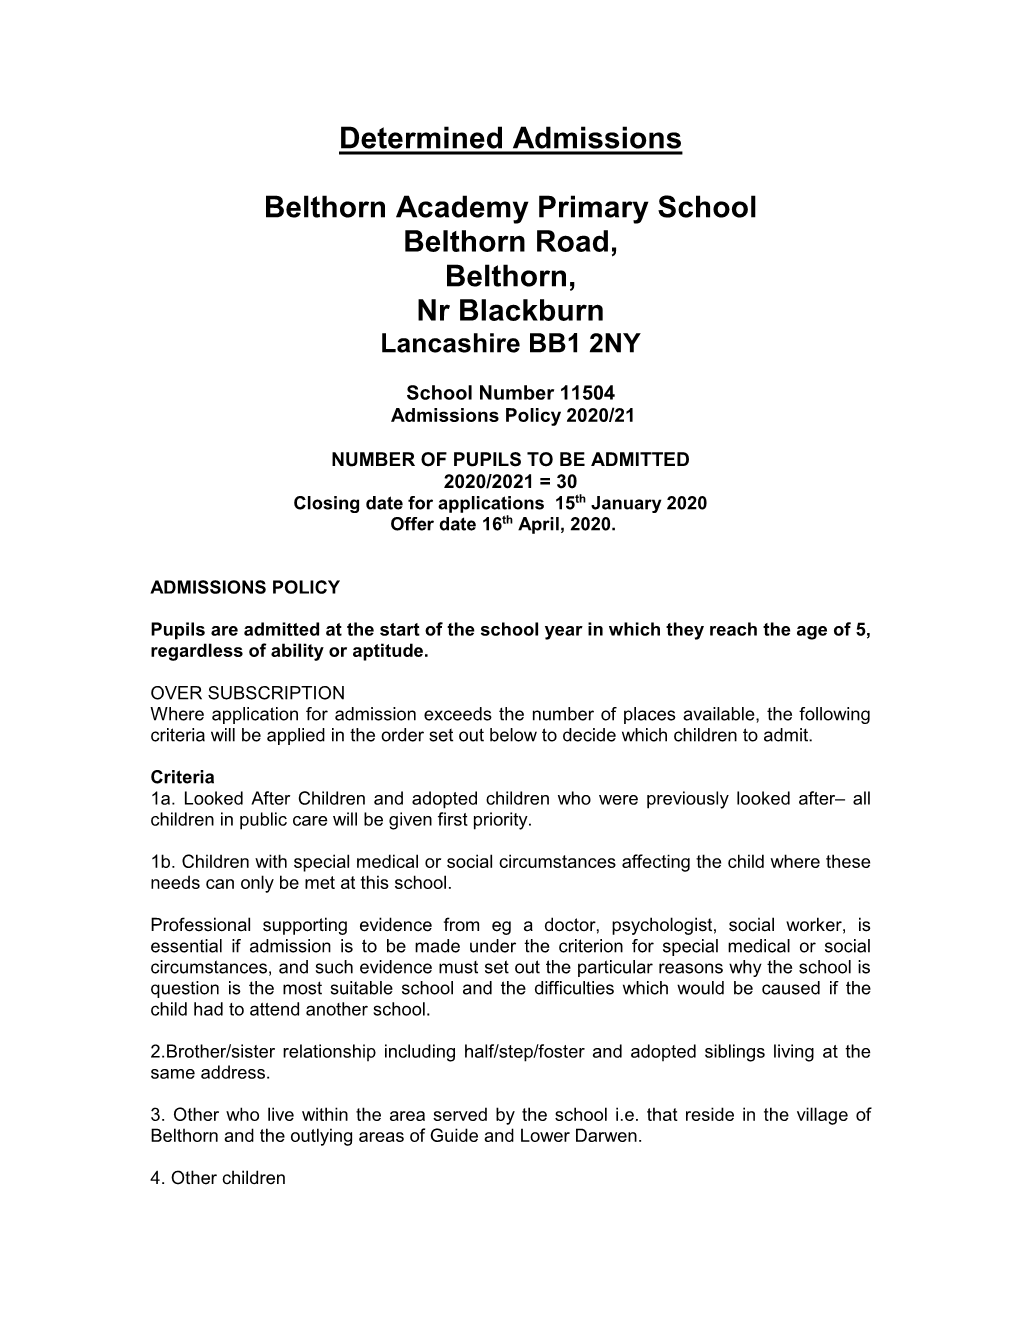 Belthorn Academy Primary School 14 January 2019.Pdf